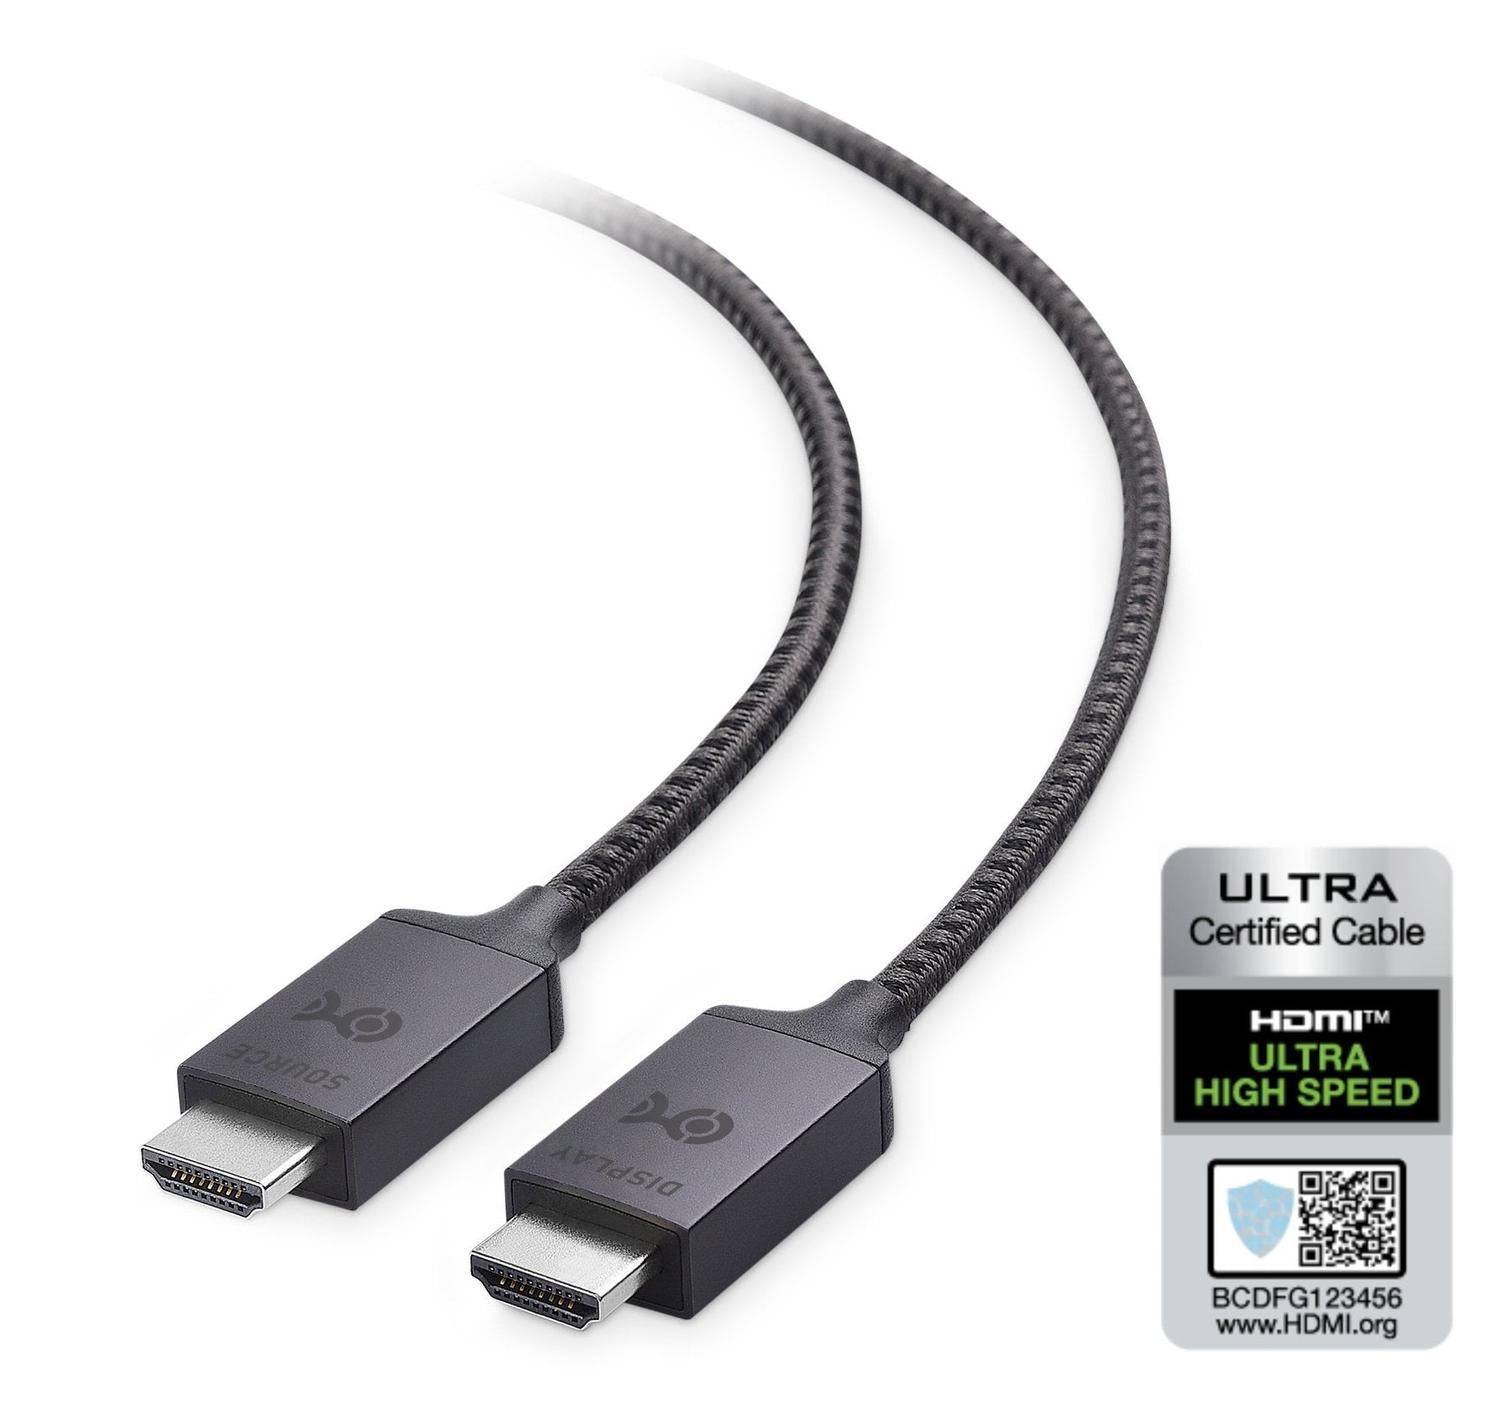 Cable Matters sertifioitu erittäin nopea HDMI2.1 AOC optinen kuitukaapeli 15 m 8K 60 Hz 4K 120 Hz 48 Gb/s Dynamic HDR eARC VRR